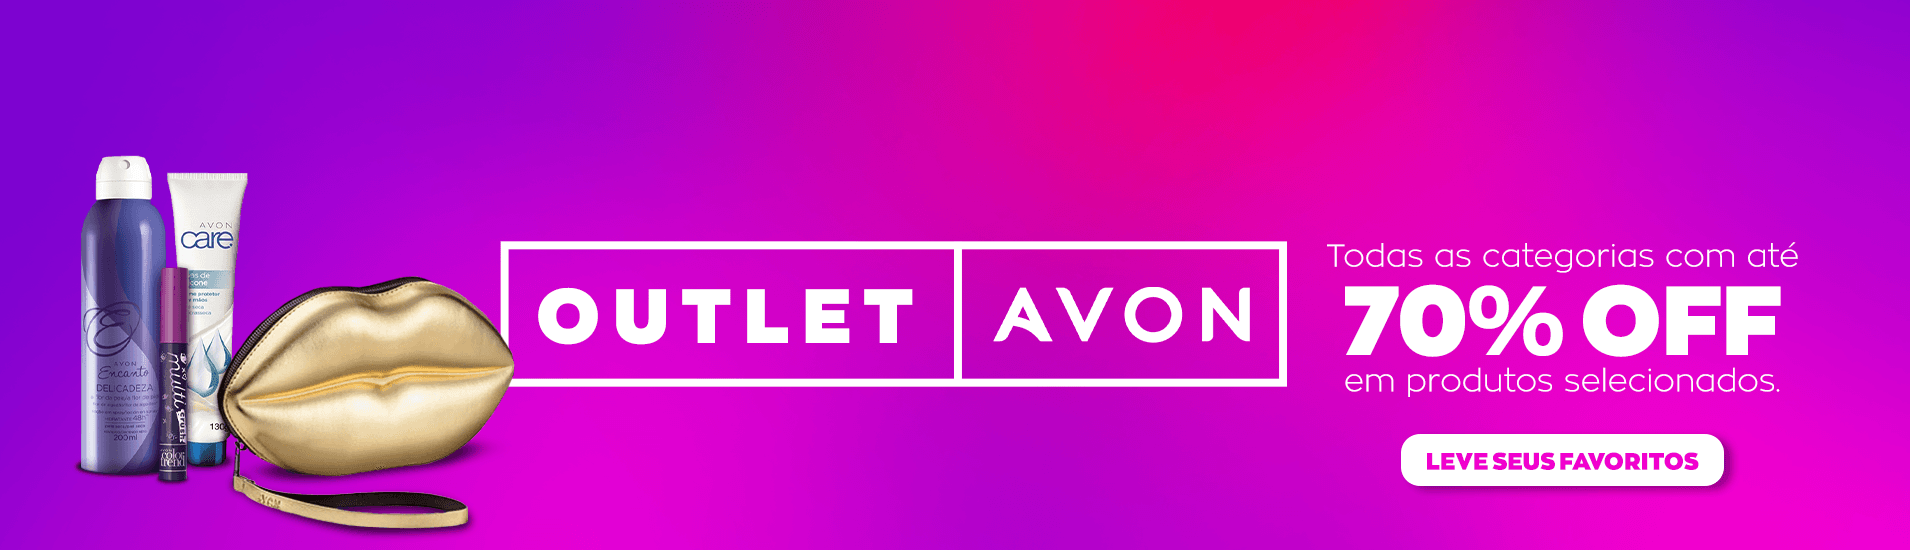  Outlet Avon com 70% OFF! 